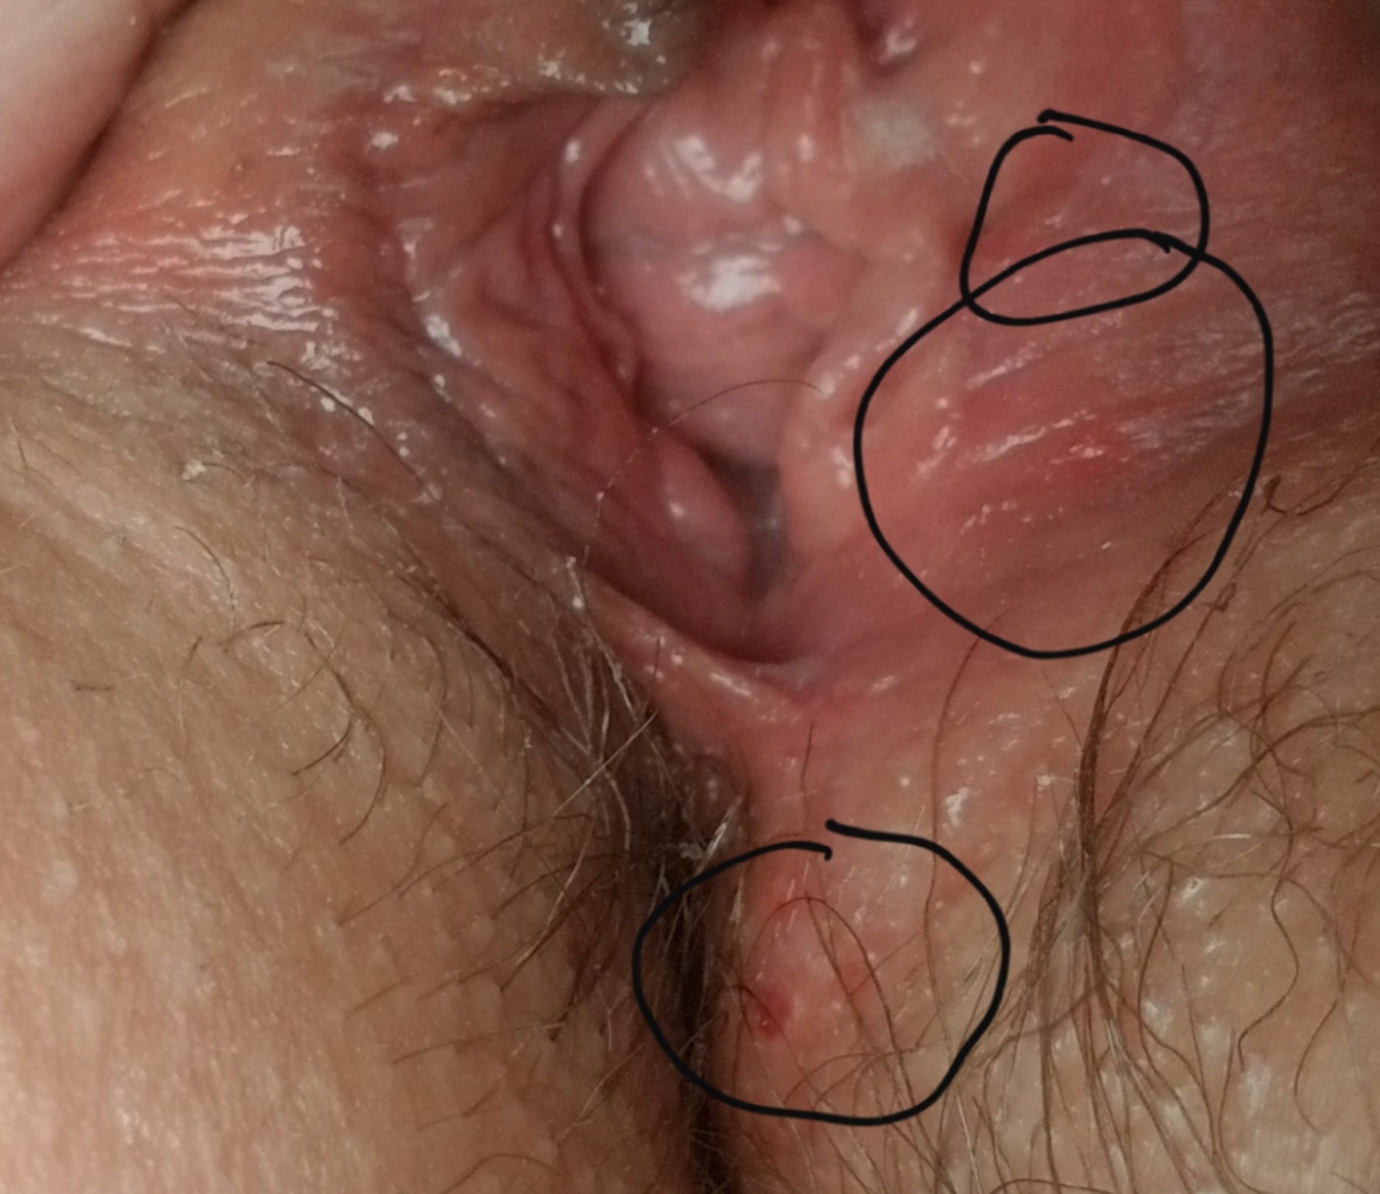 HELP, HELP Yeast infection, herpes, Vaginitis? 